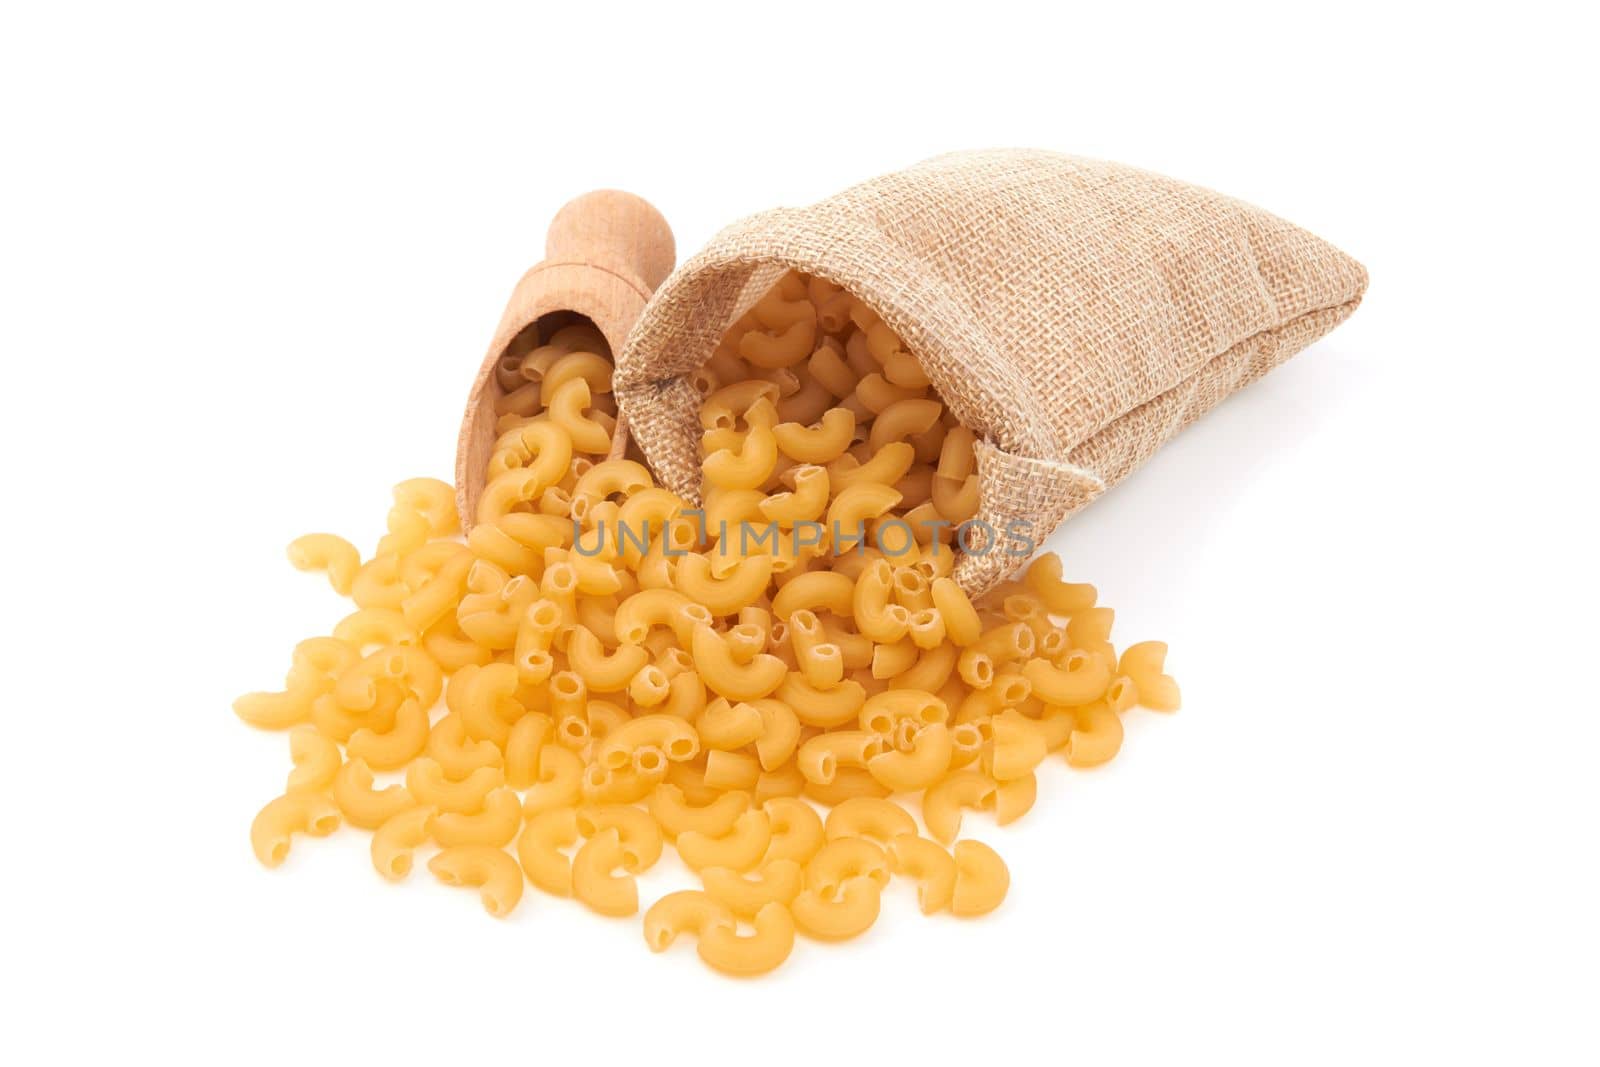 Elbow macaroni isolated on a white background